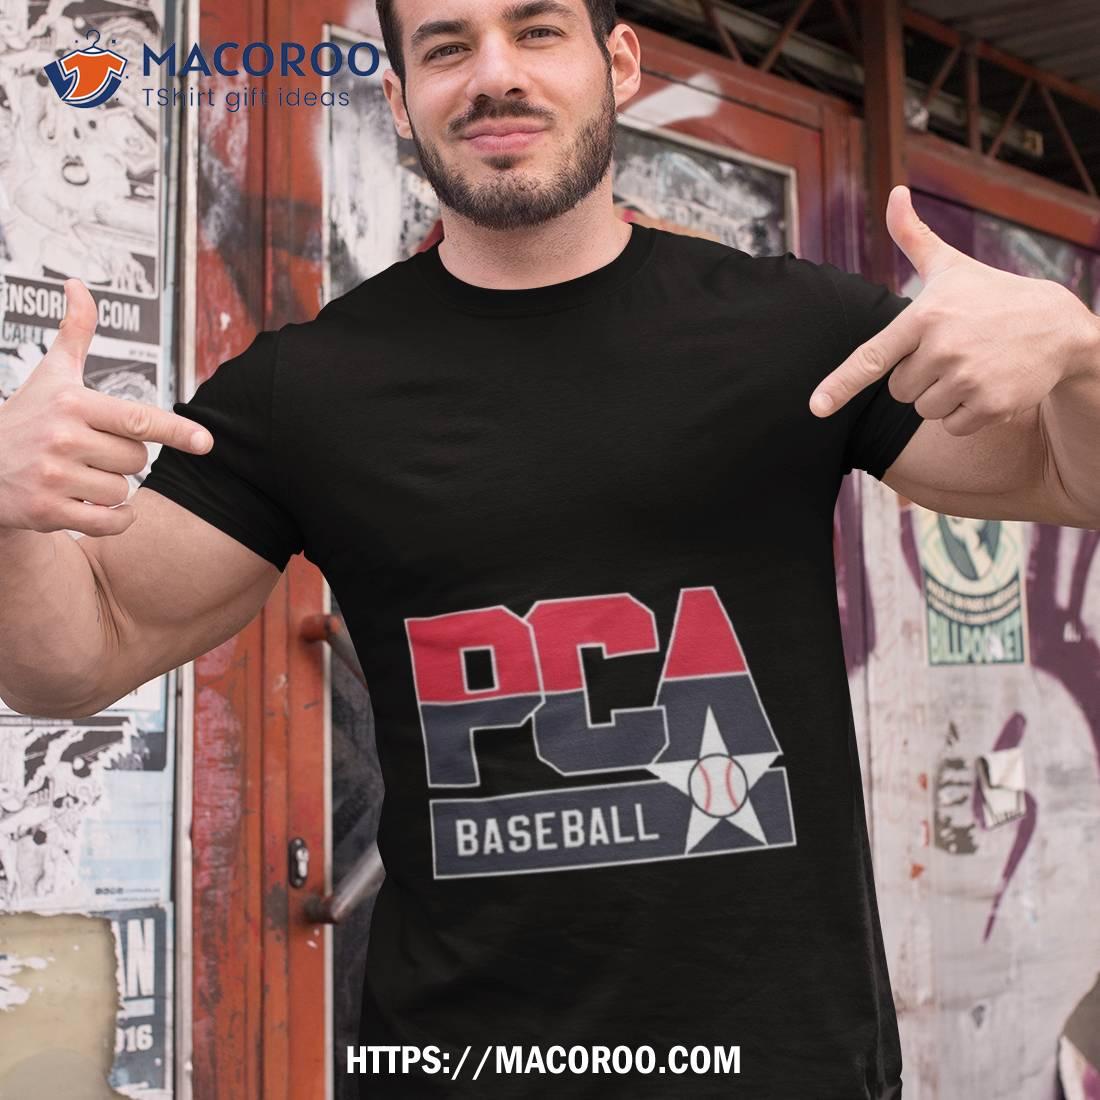 Official Team Pca Baseball shirt